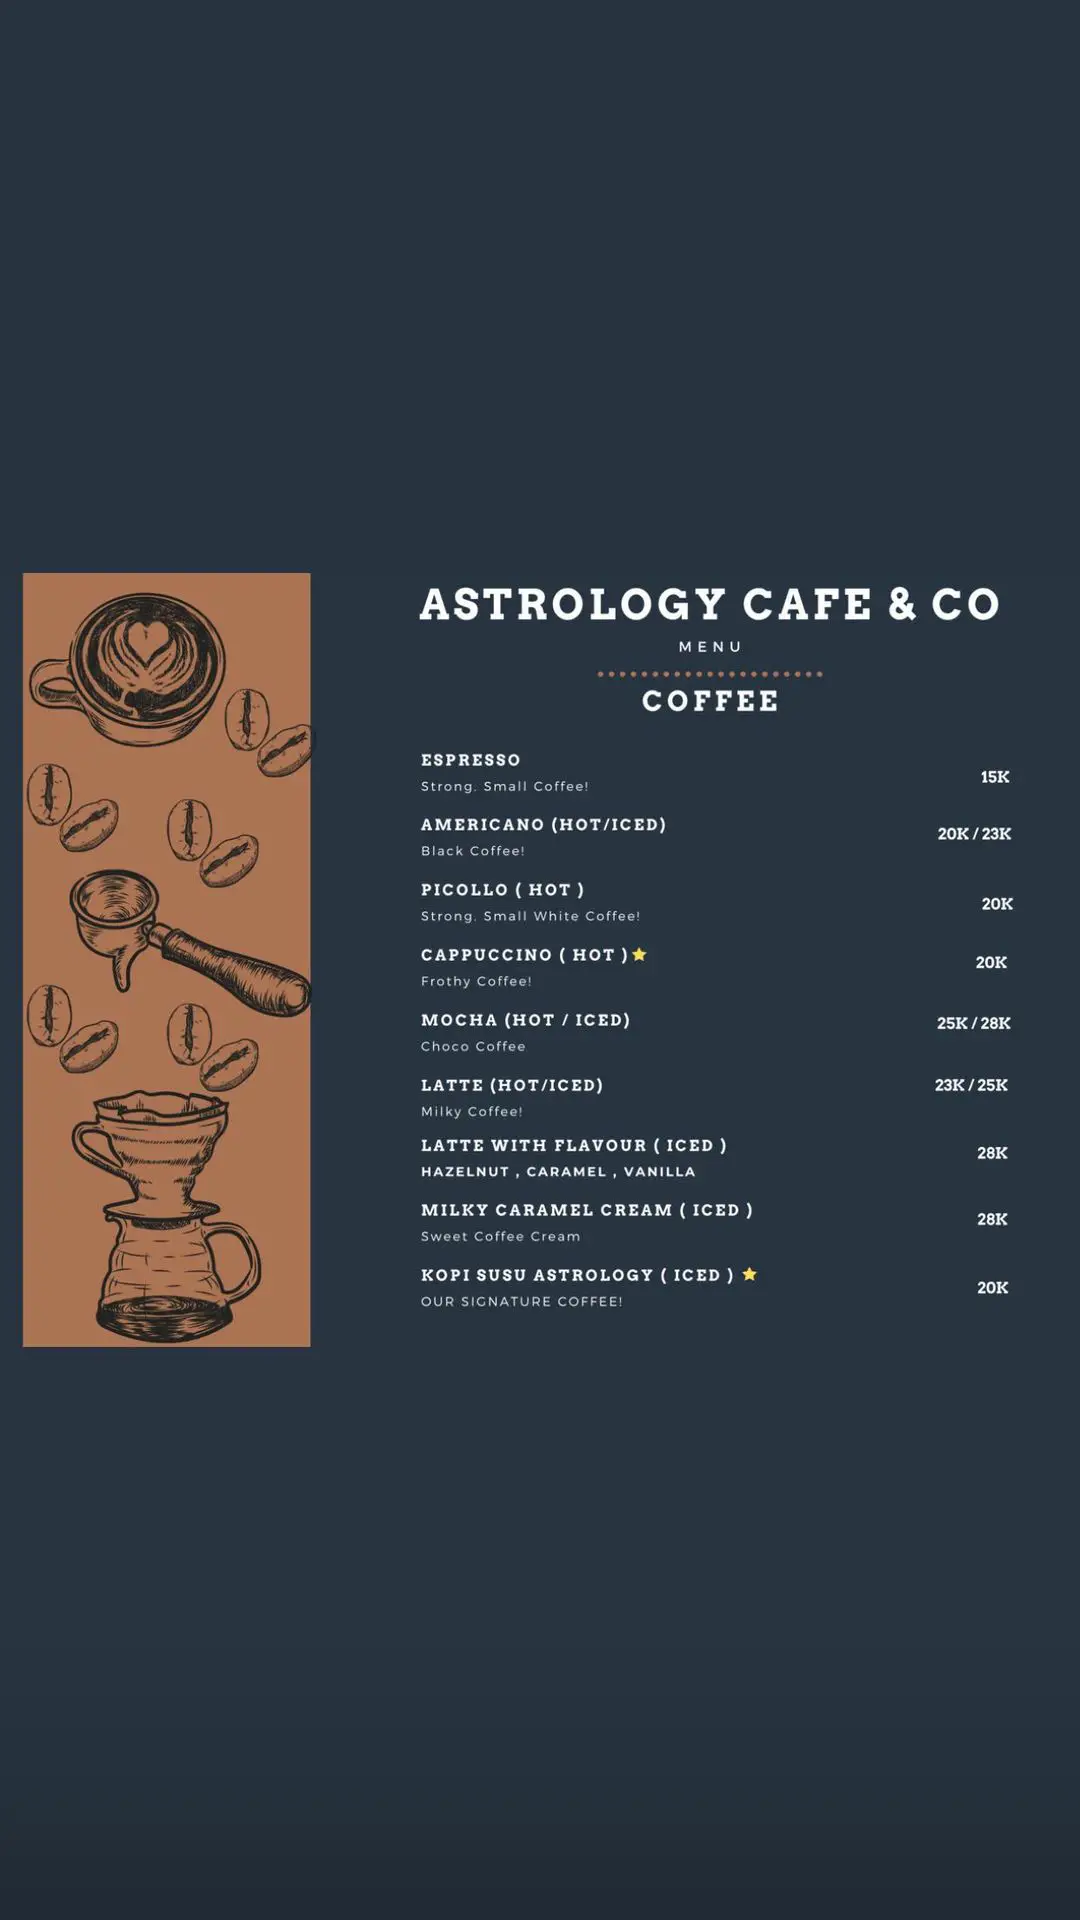 Astrology Cafe & Co